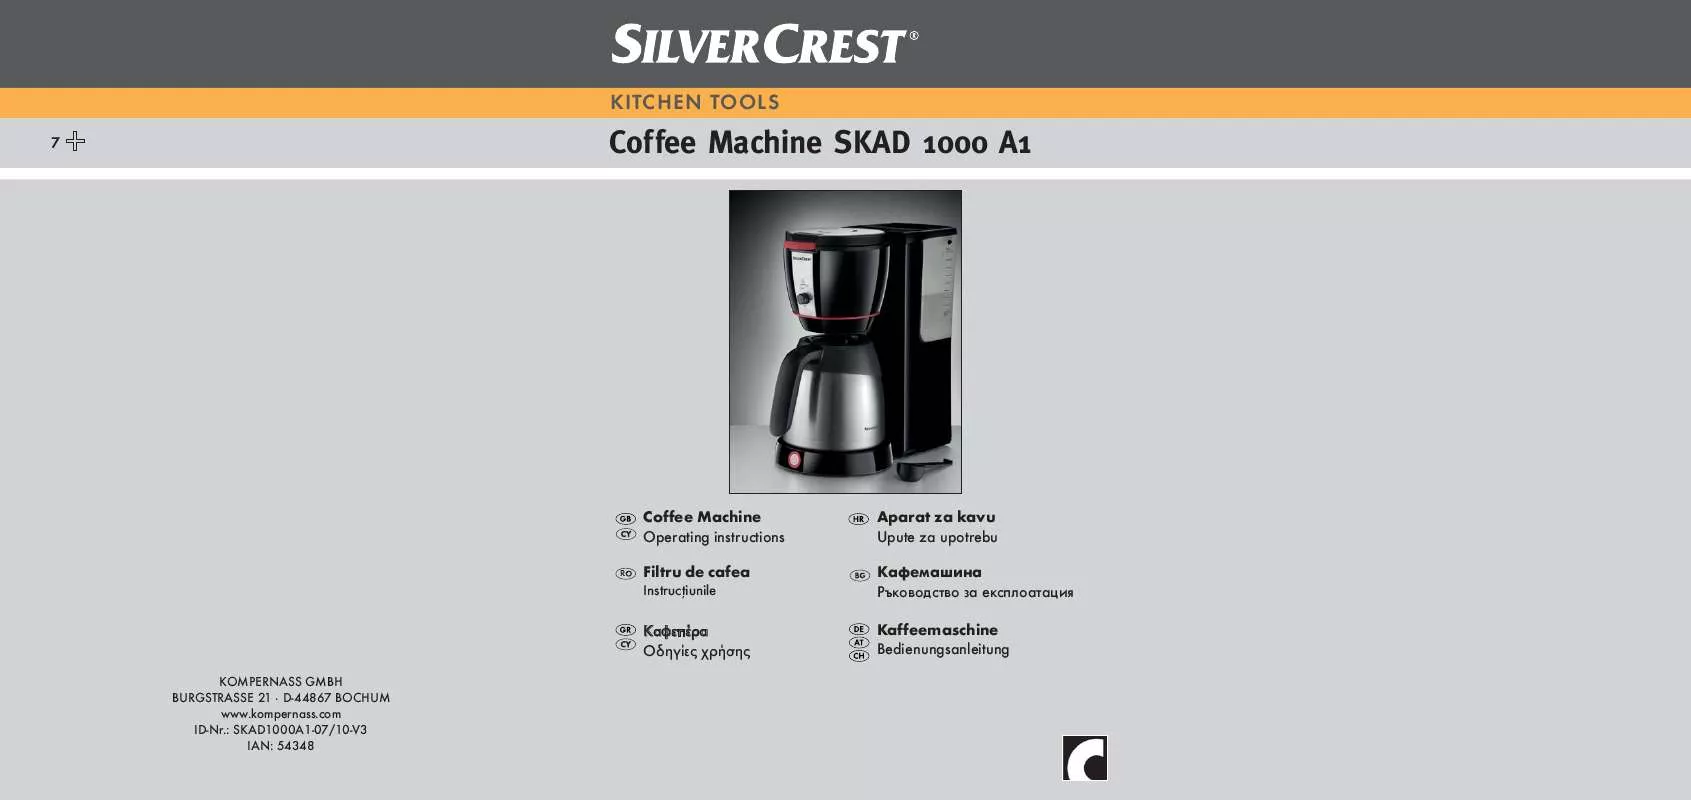 Mode d'emploi SILVERCREST SKAD 1000 A1 COFFEE MACHINE